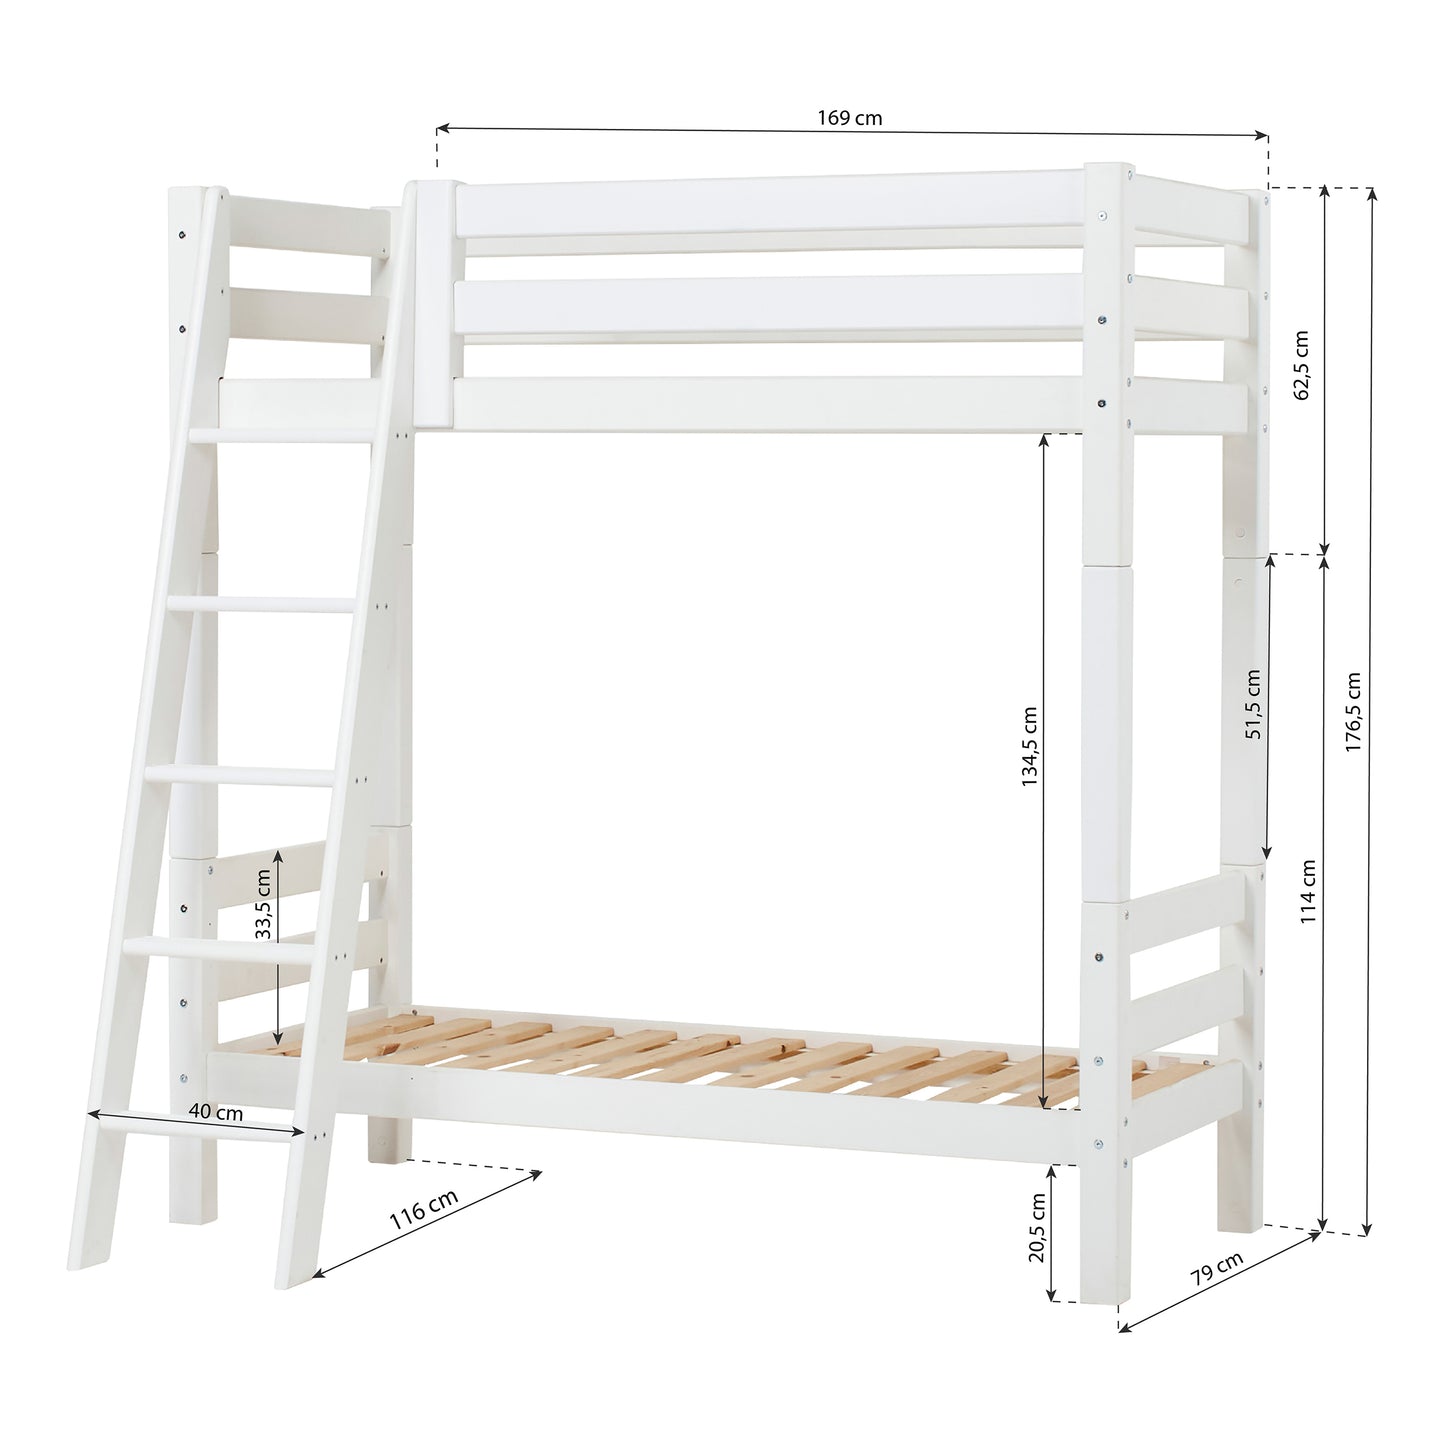 Hoppekids ECO Luxury High bunk bed with slanted ladder